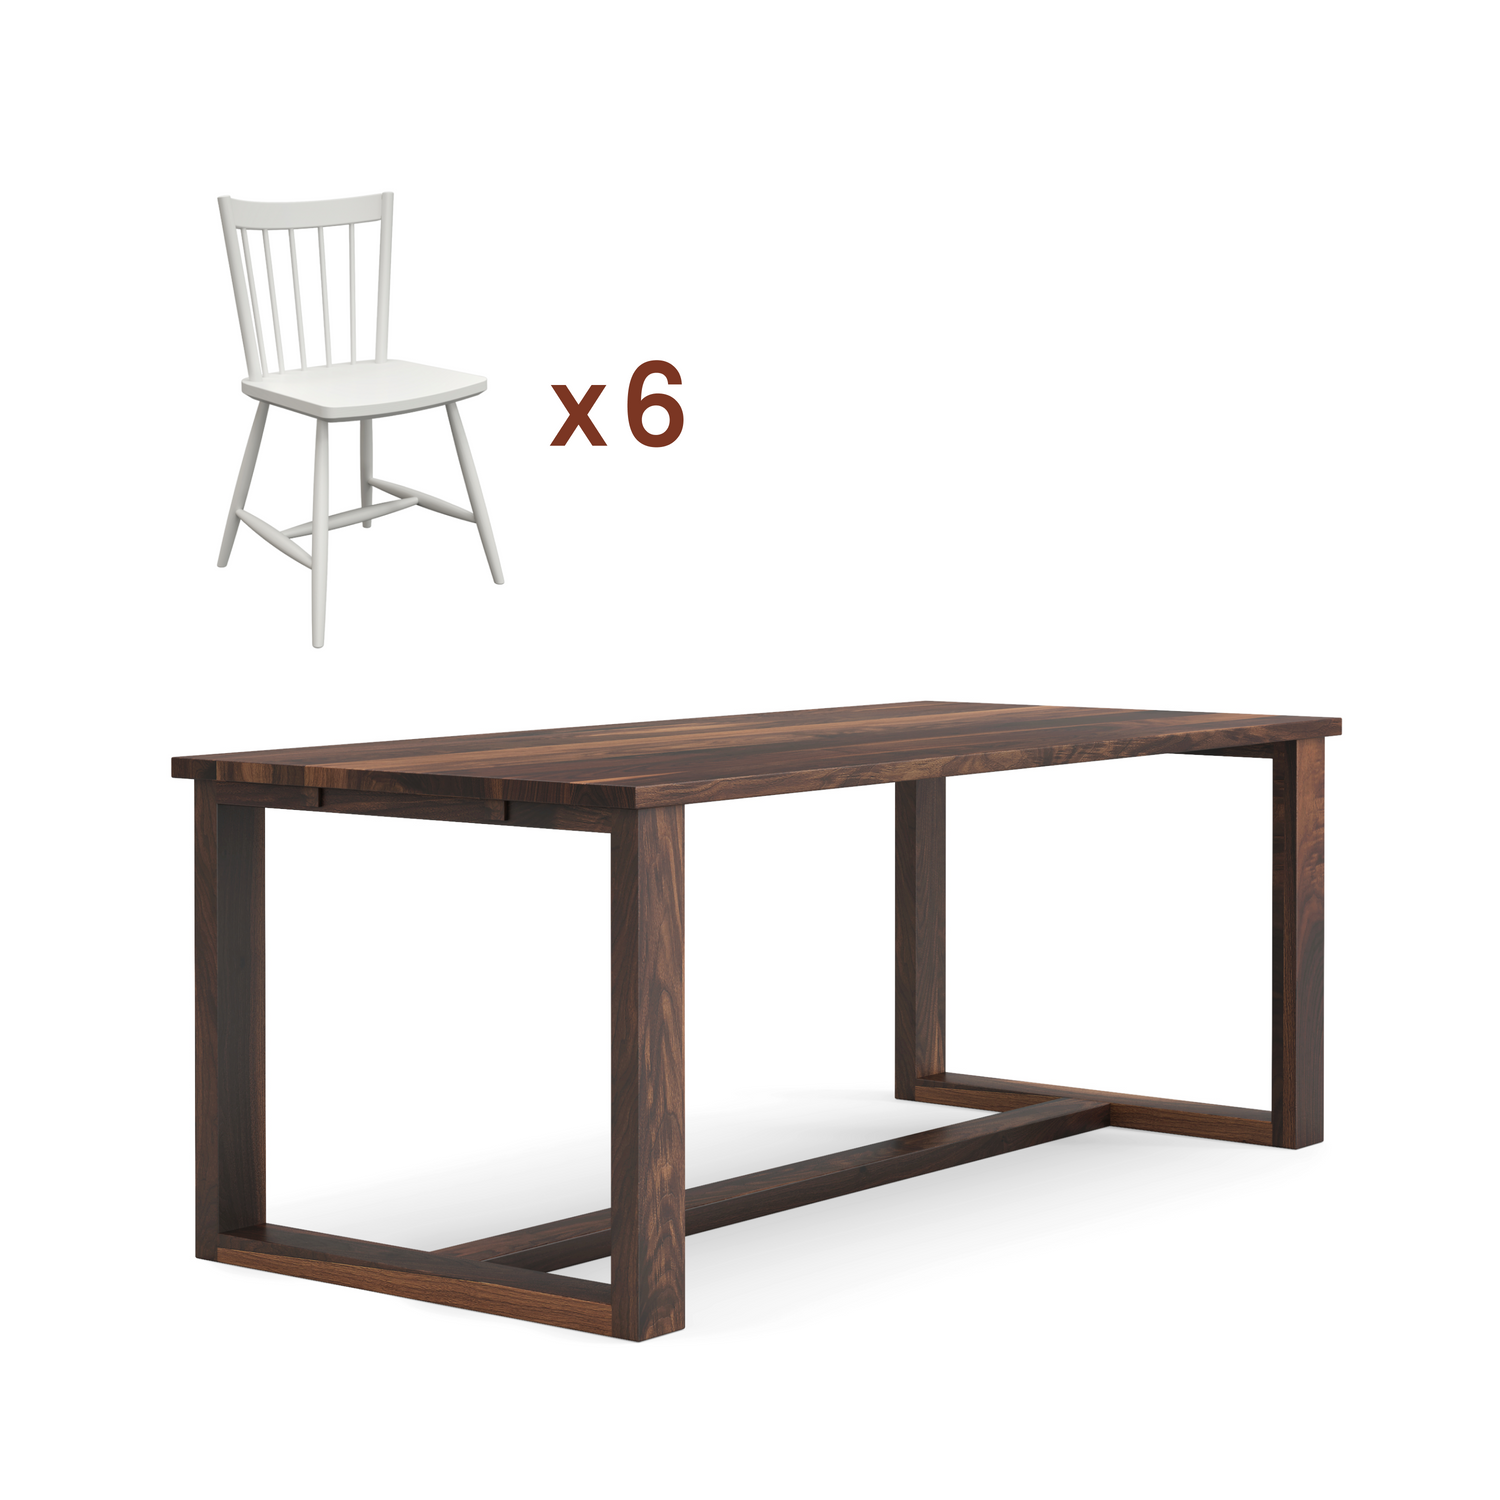 Arwin table + chairs bundle